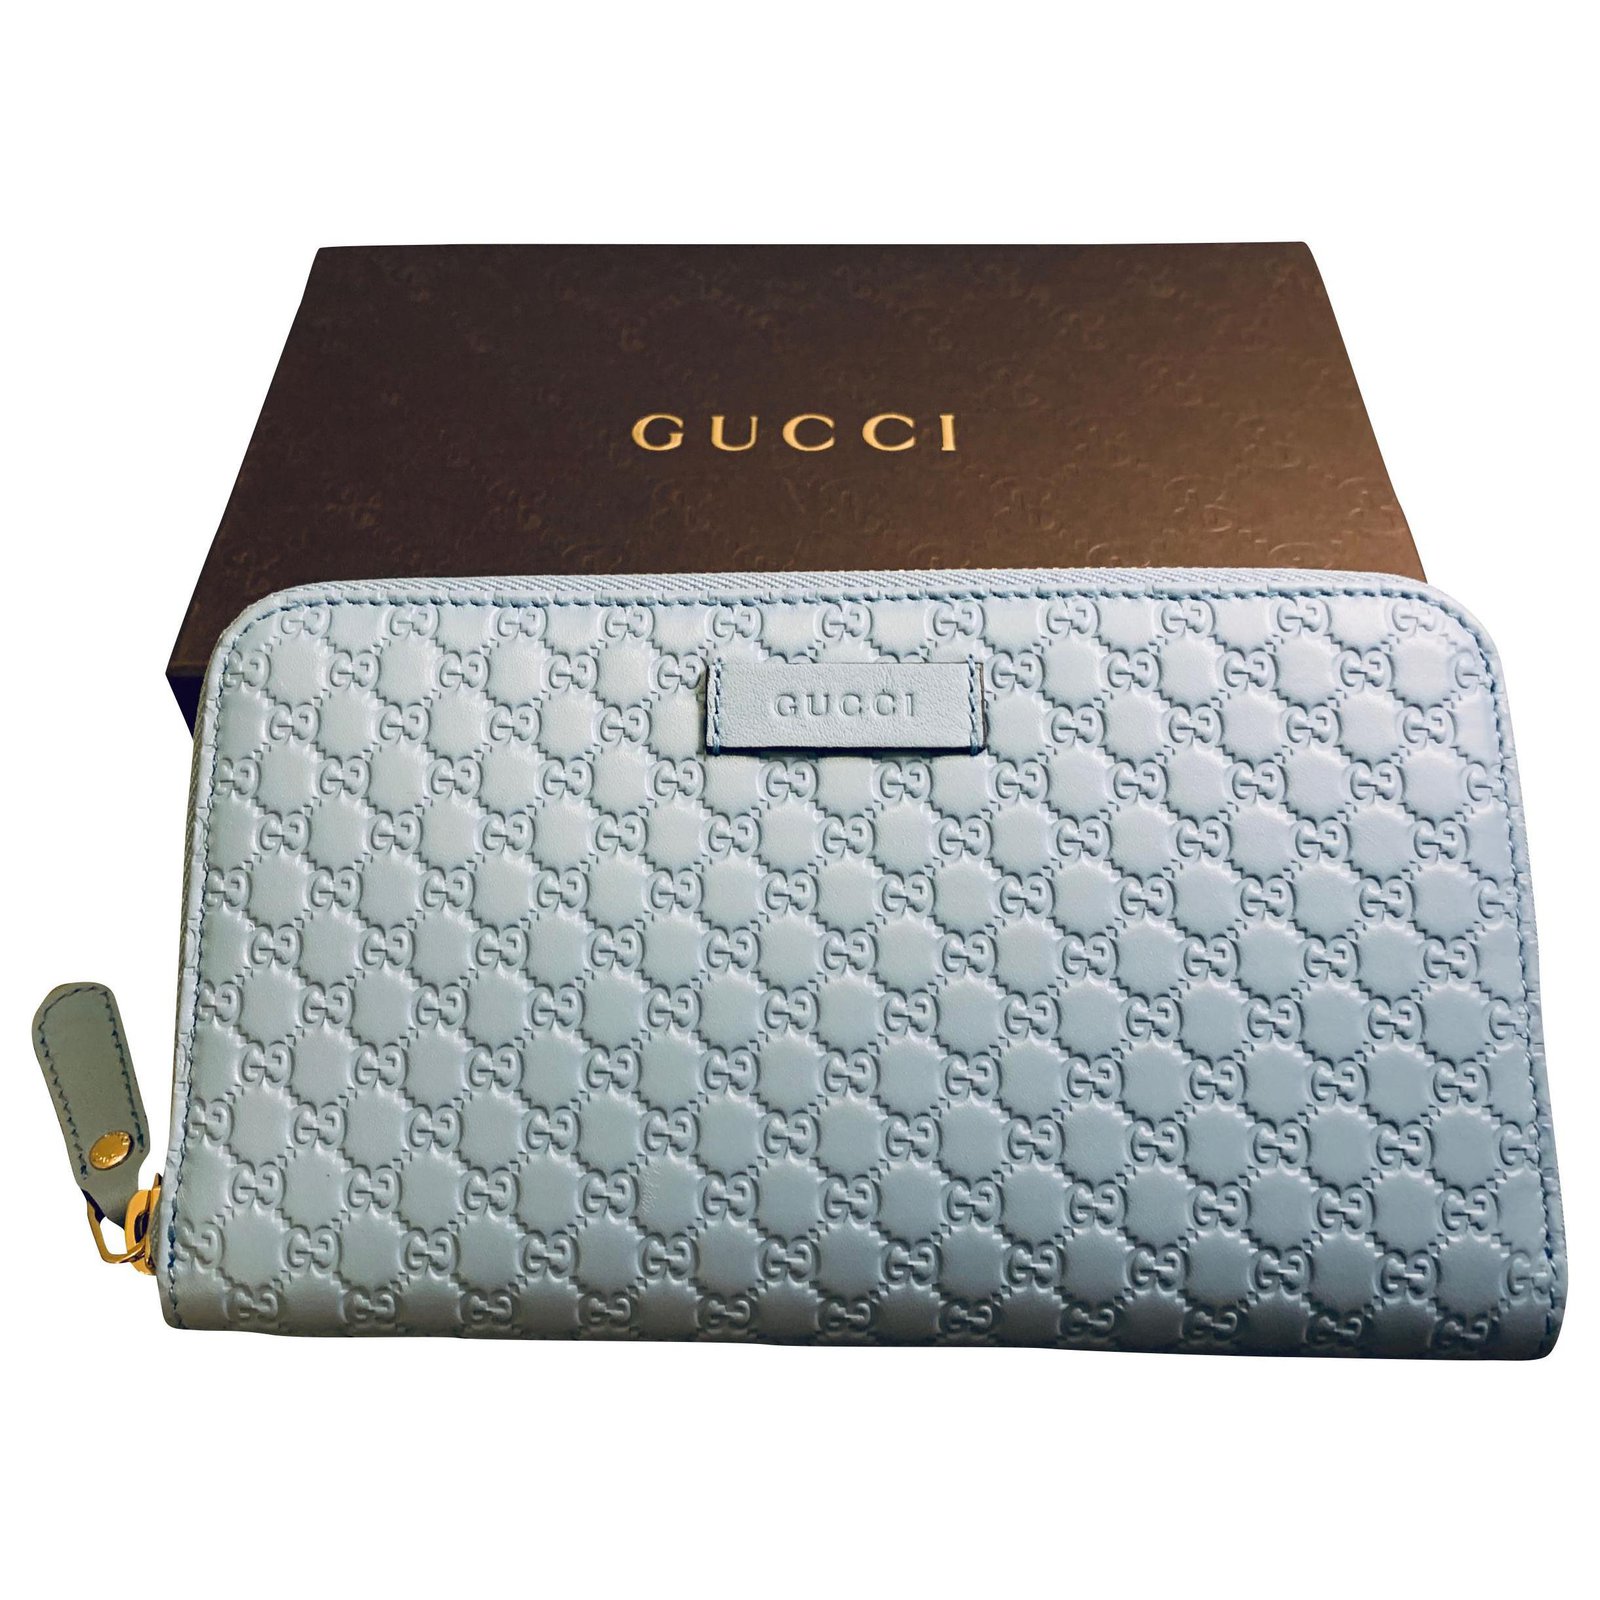 gucci signature wallet price